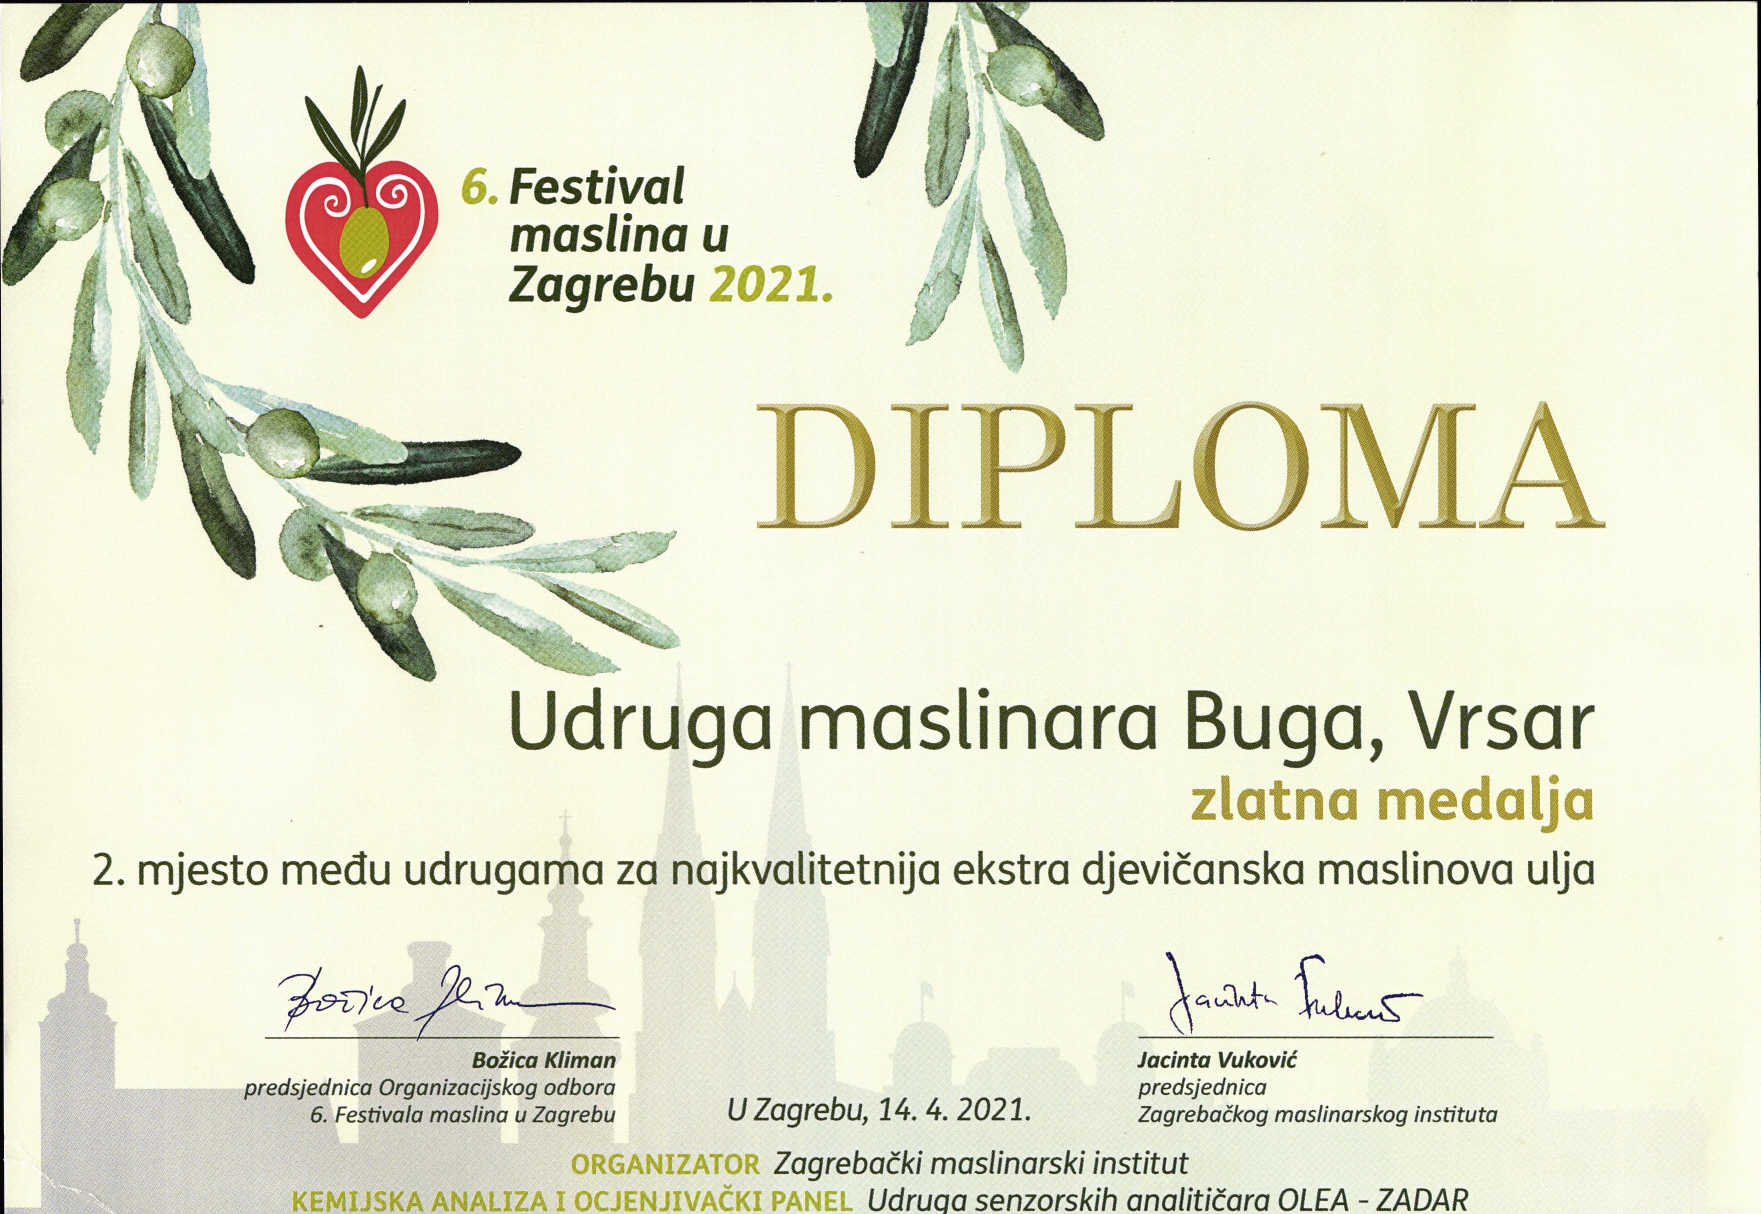 Udruga maslinara Buga Vrsar osvojila drugo mjesto na festivalu maslina u Zagrebu